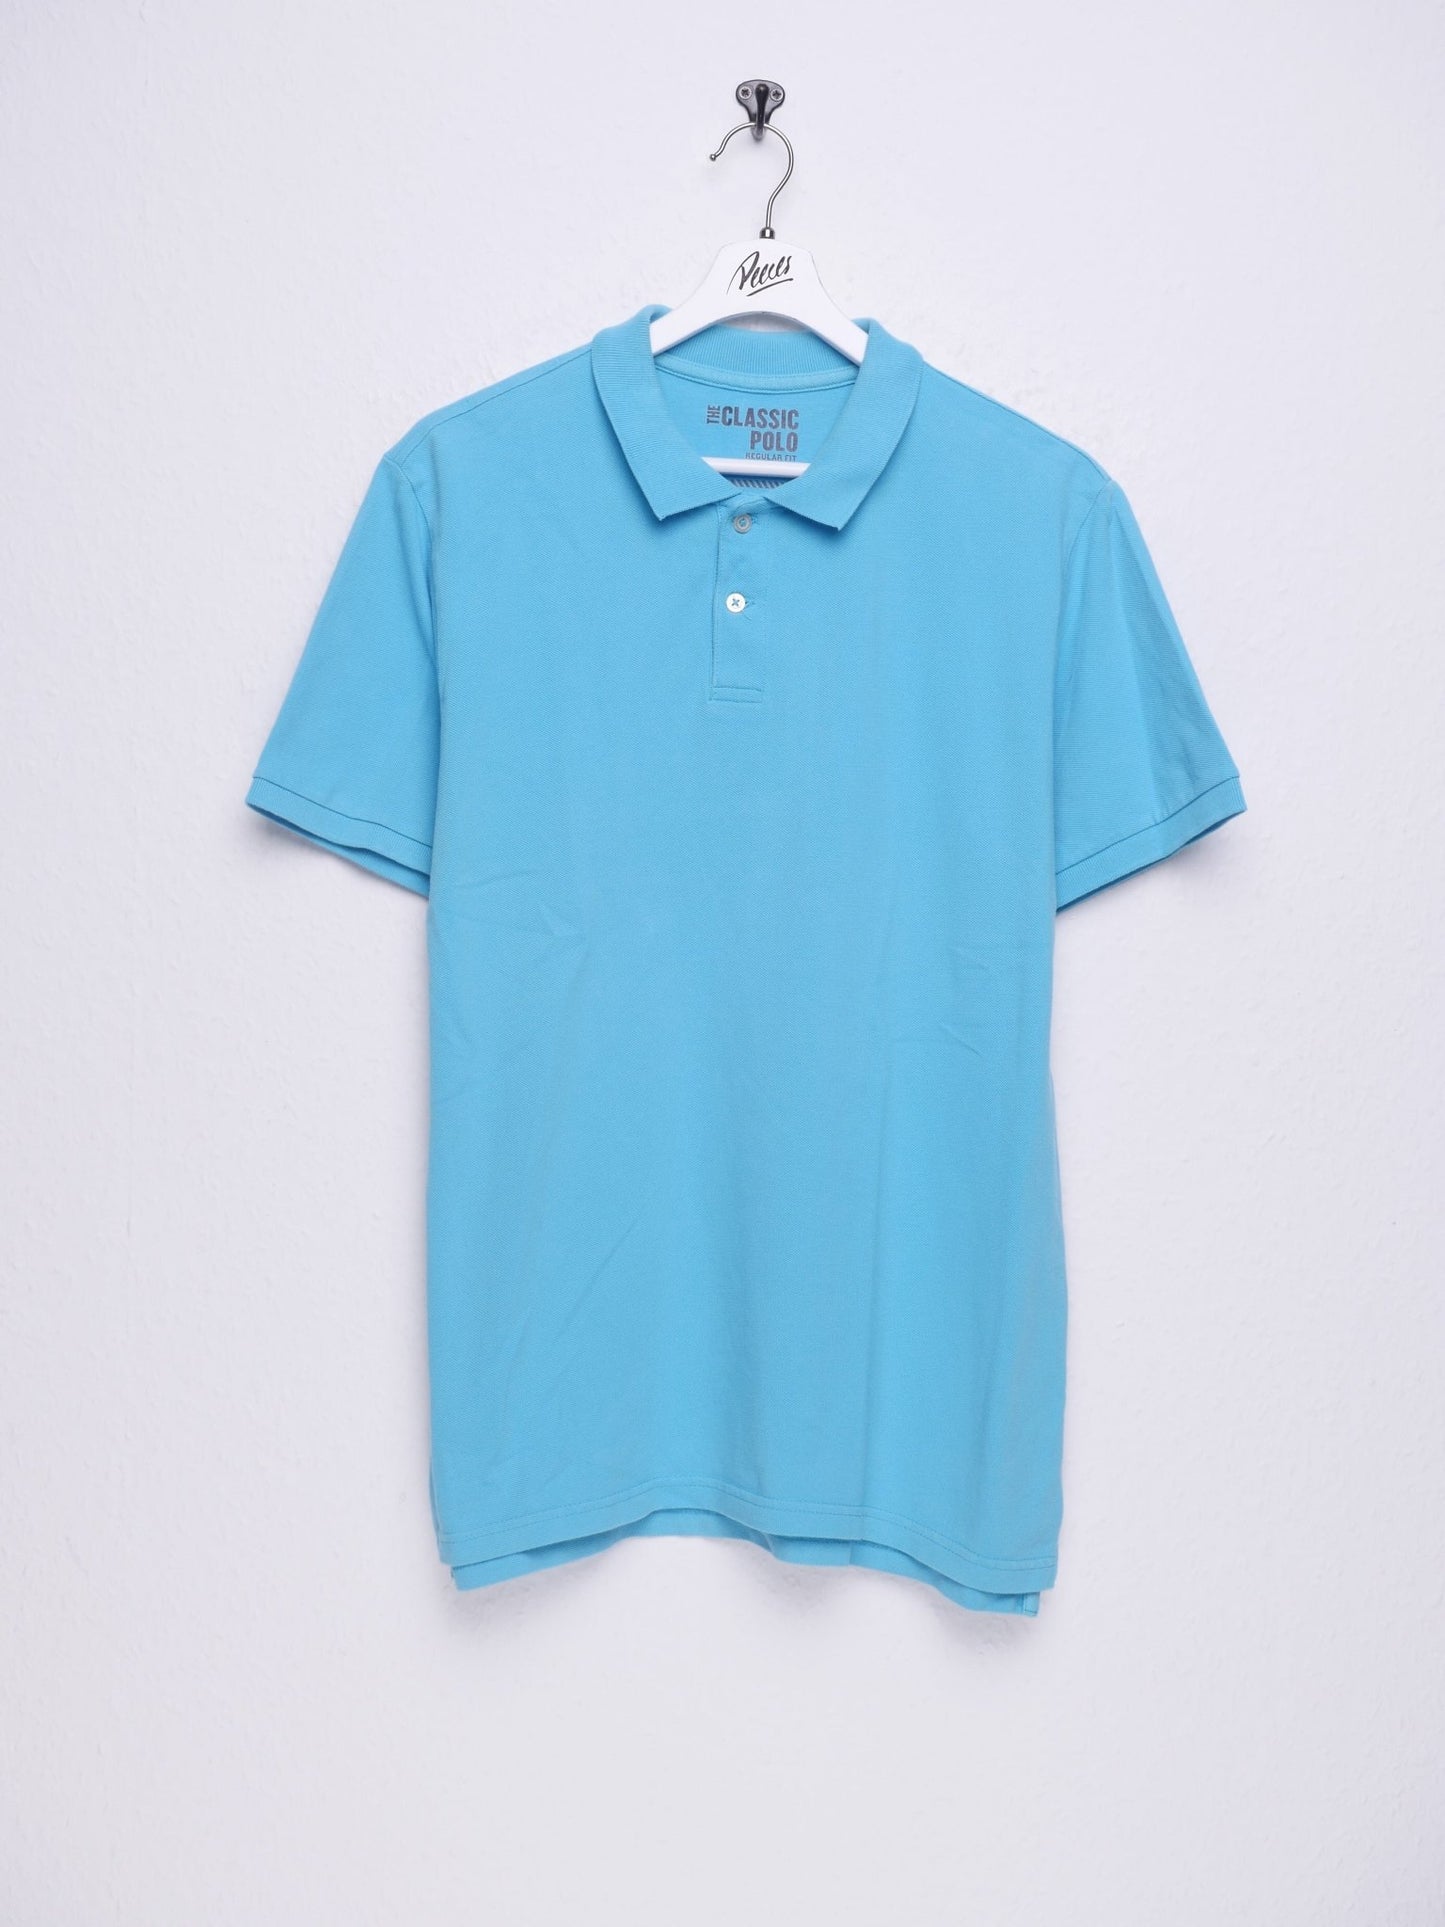 Vintage basic turquoise S/S Polo Shirt - Peeces